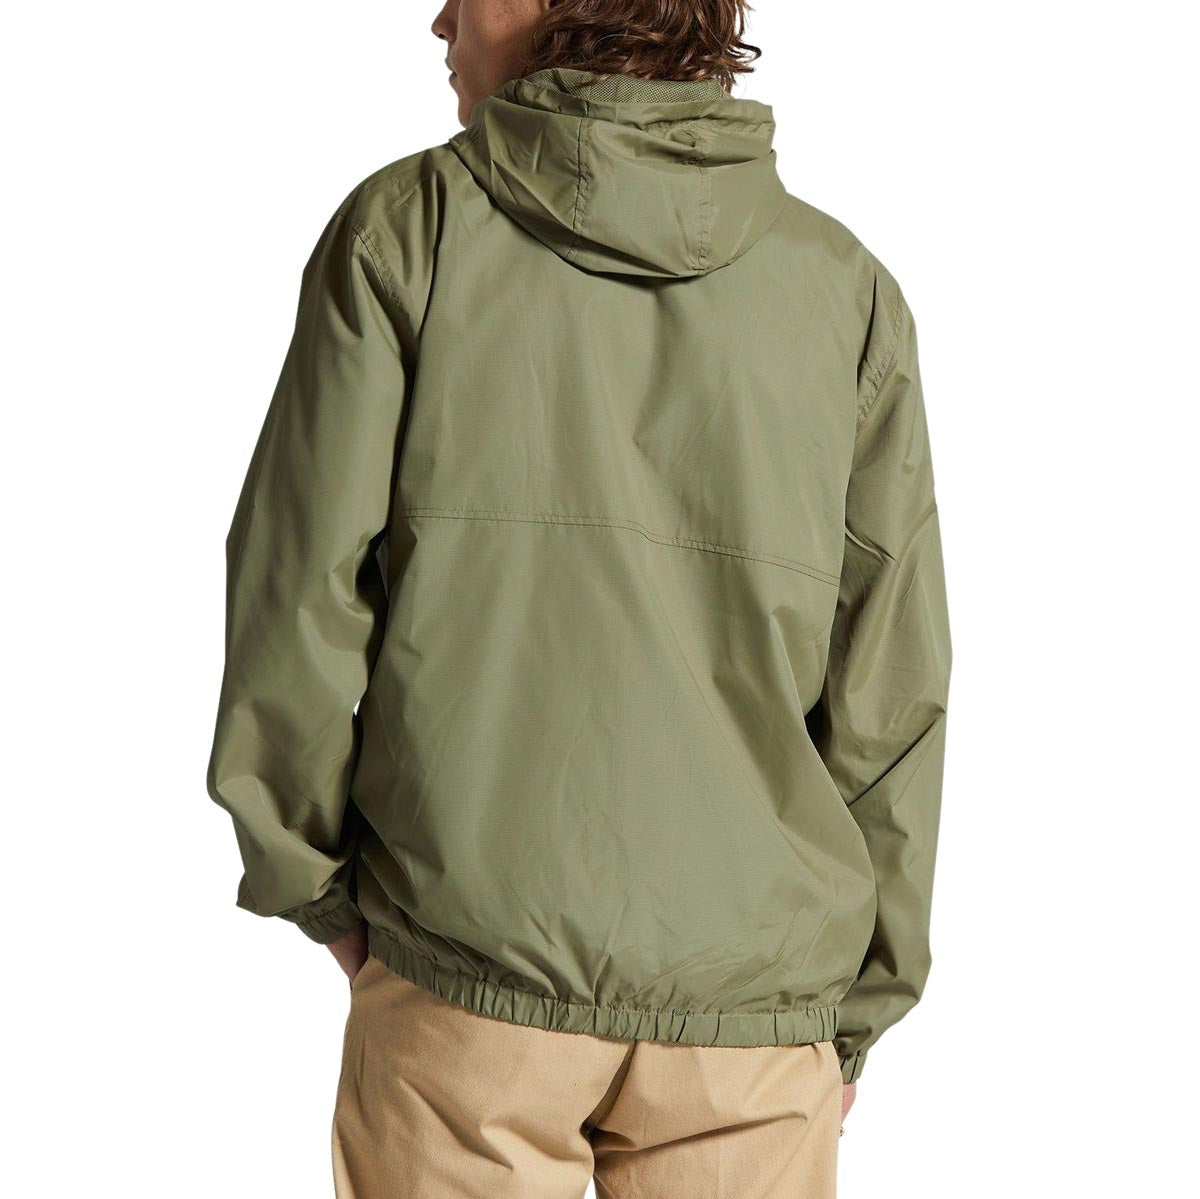 Brixton Claxton Crest Lw Zip Hooded Jacket - Olive Surplus image 2